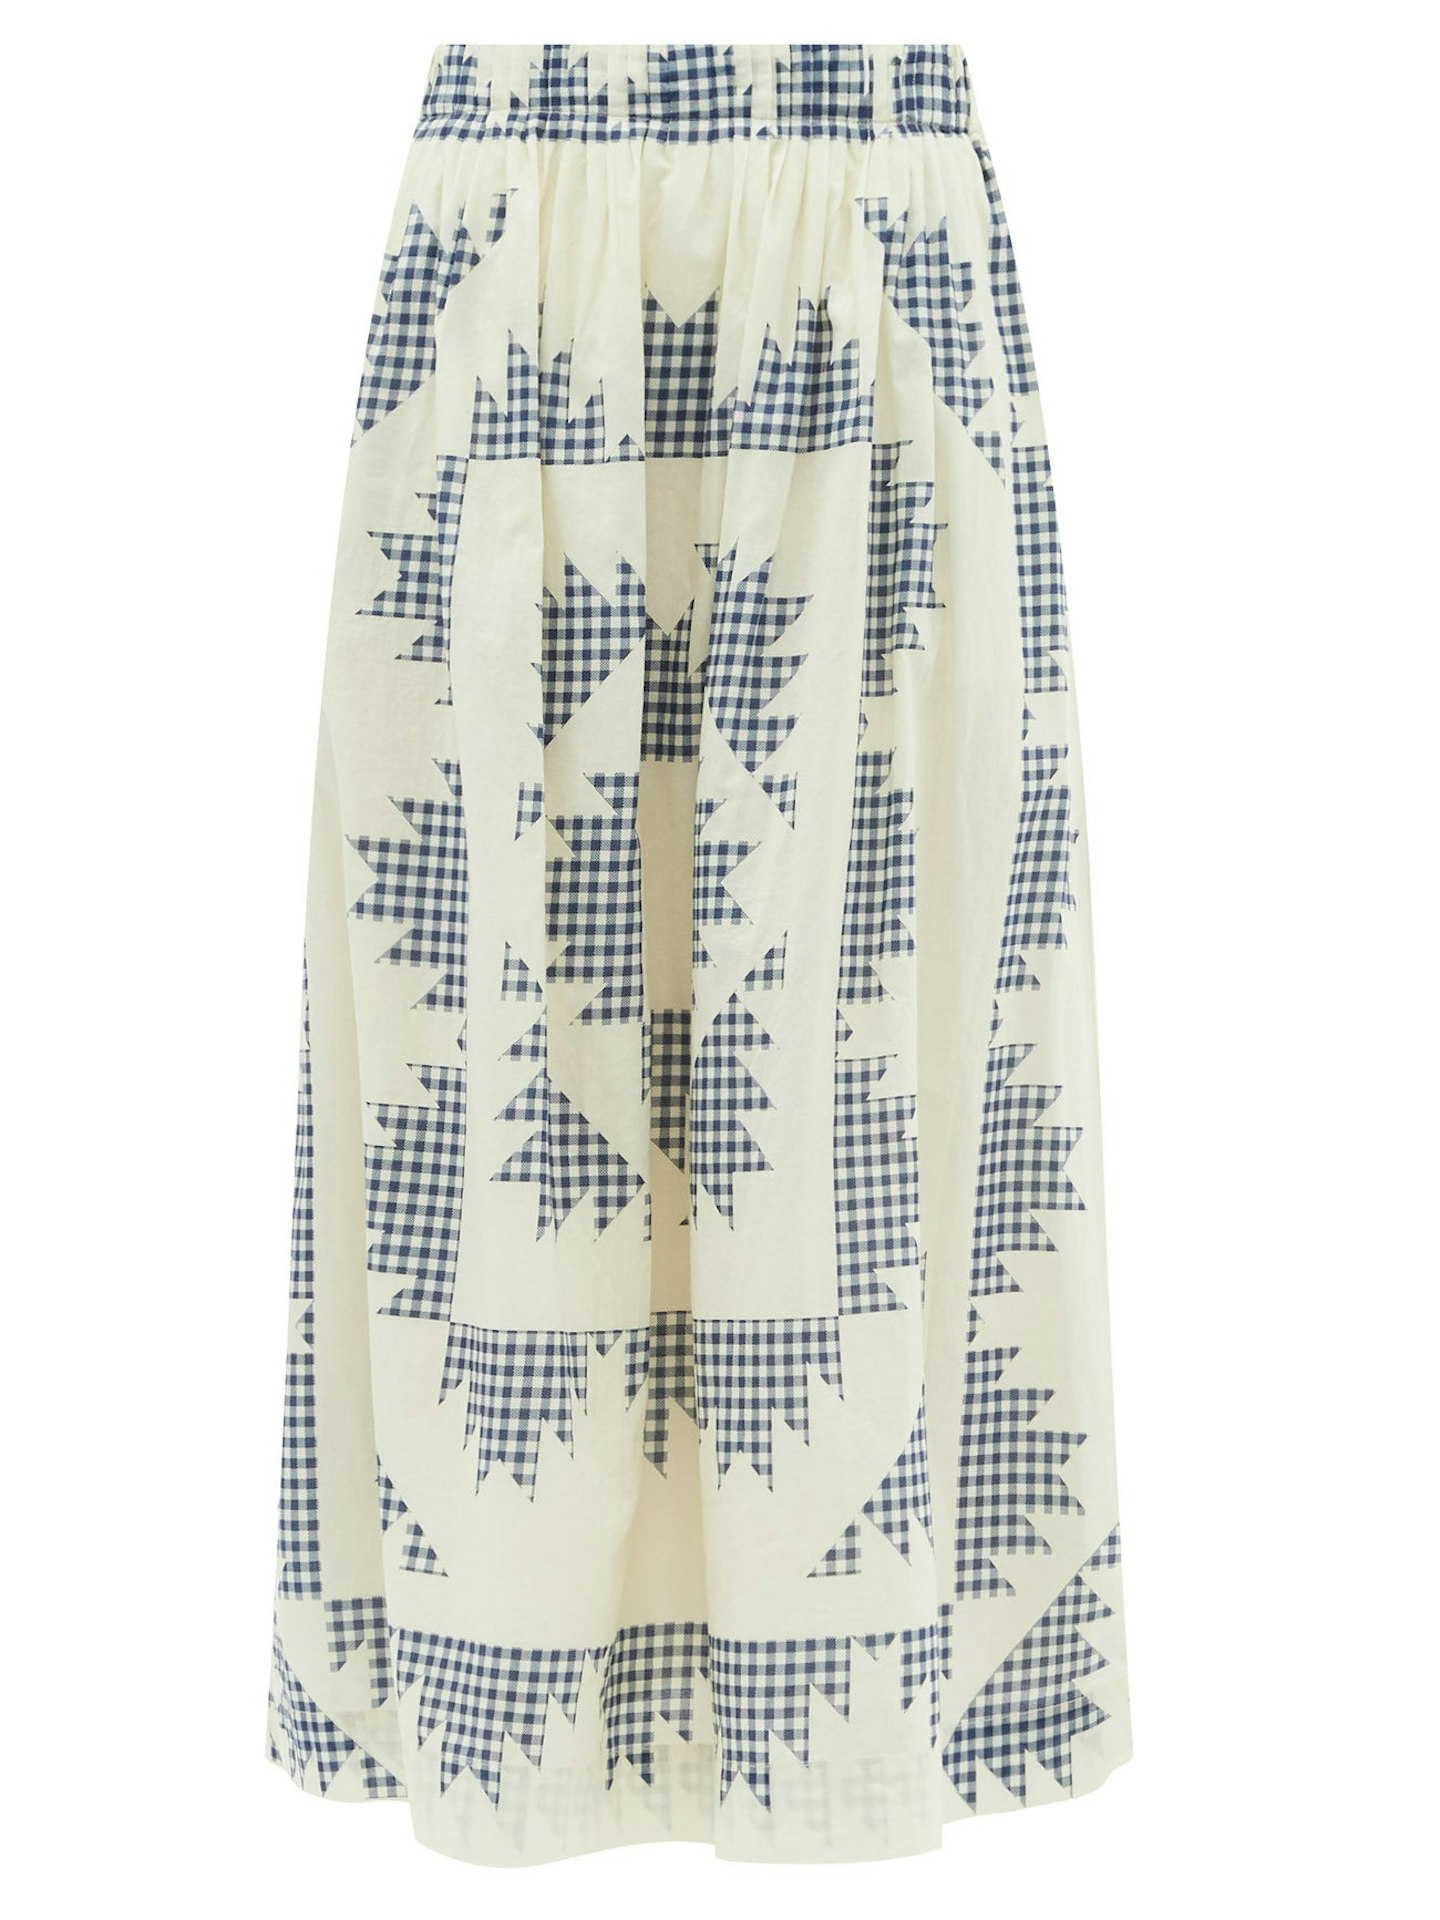 SEA, Gloucester Patchwork-Gingham Cotton Skirt, £315